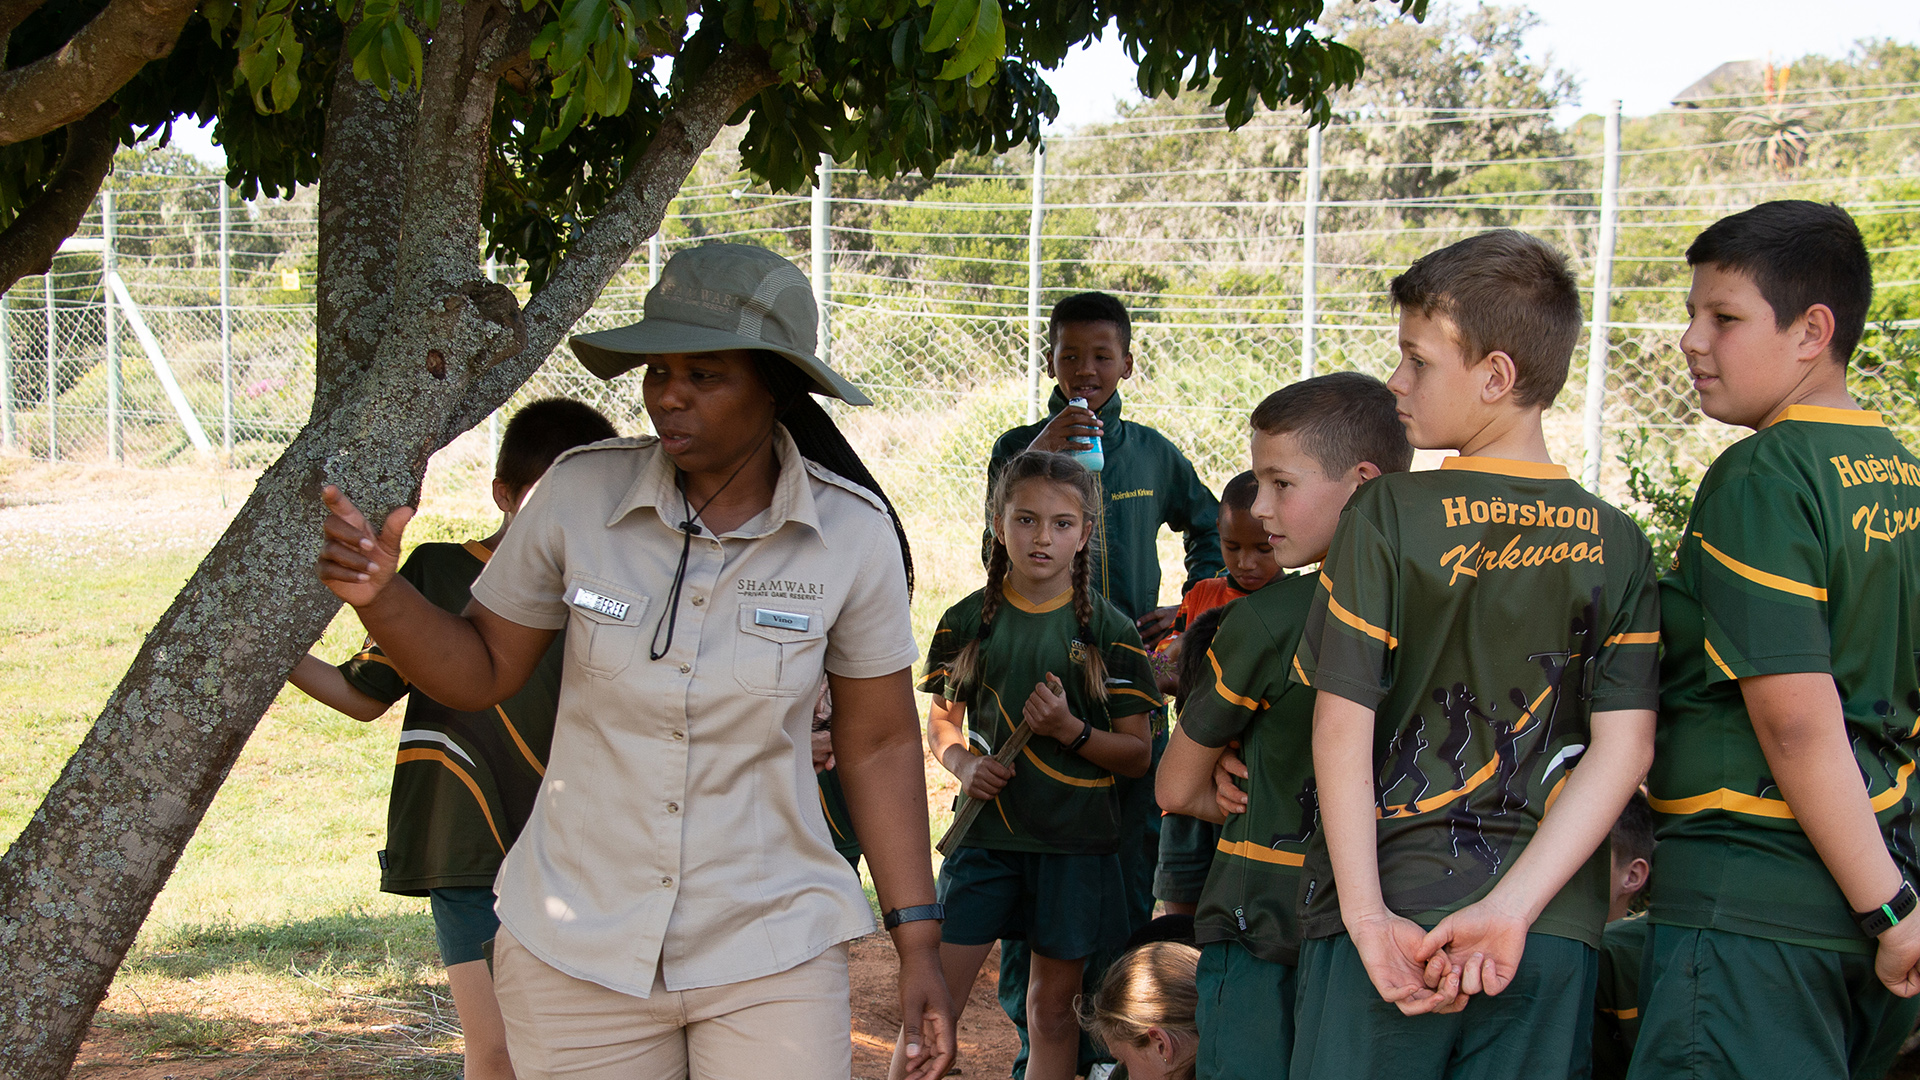 A woman in Born Free uniform with South African school children in school uniform